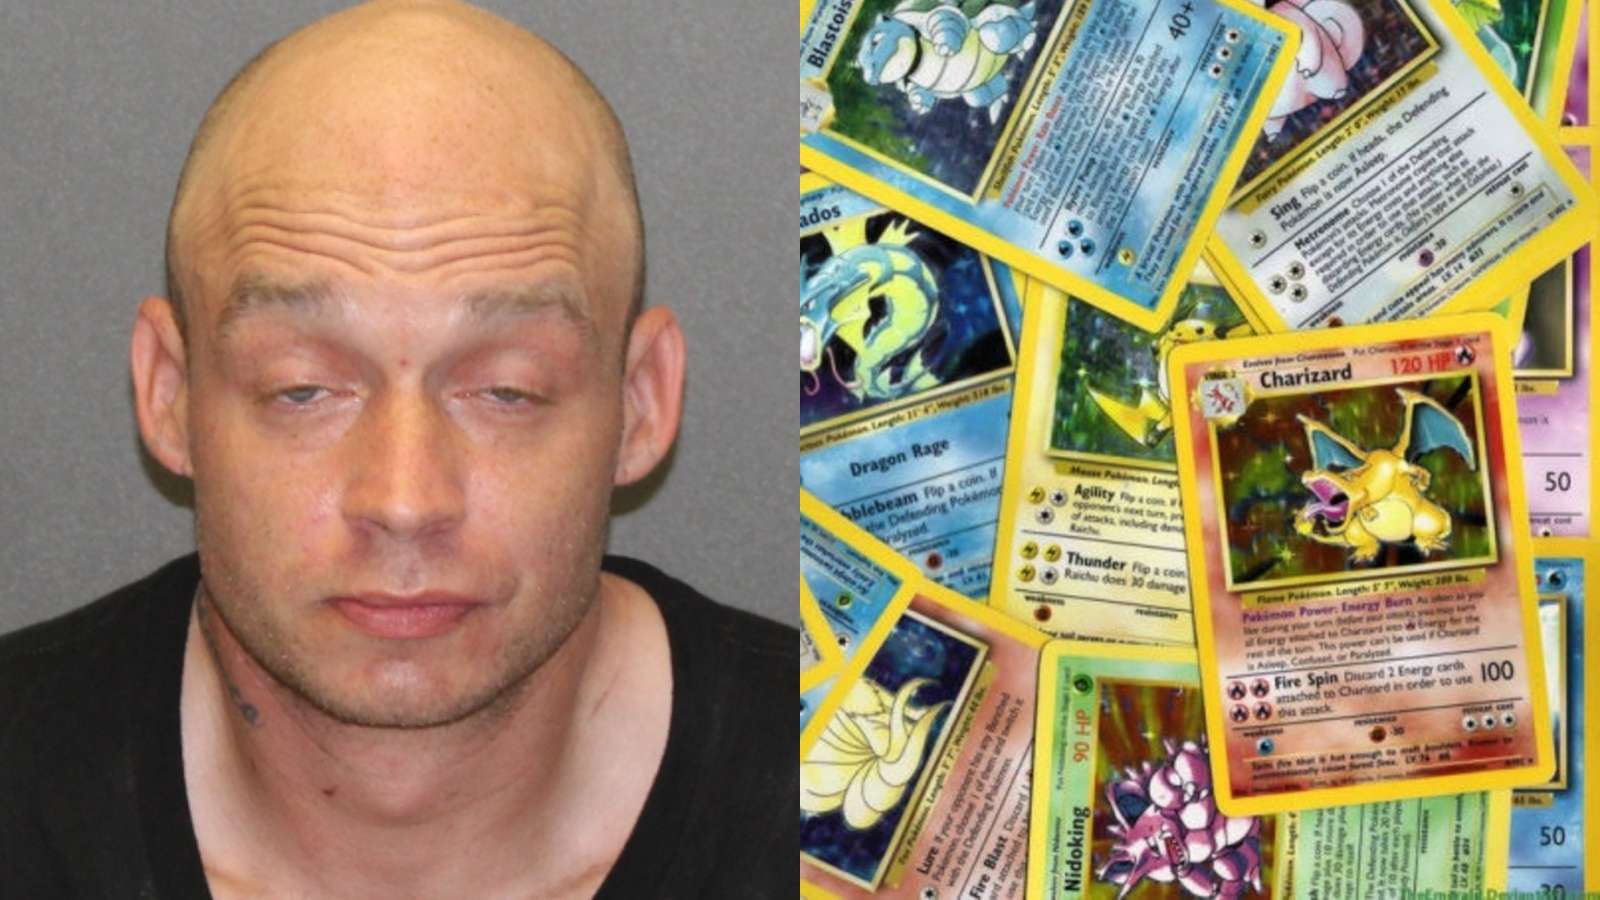 Jeremiah E. Burnette arrested thanks to pokemon cards